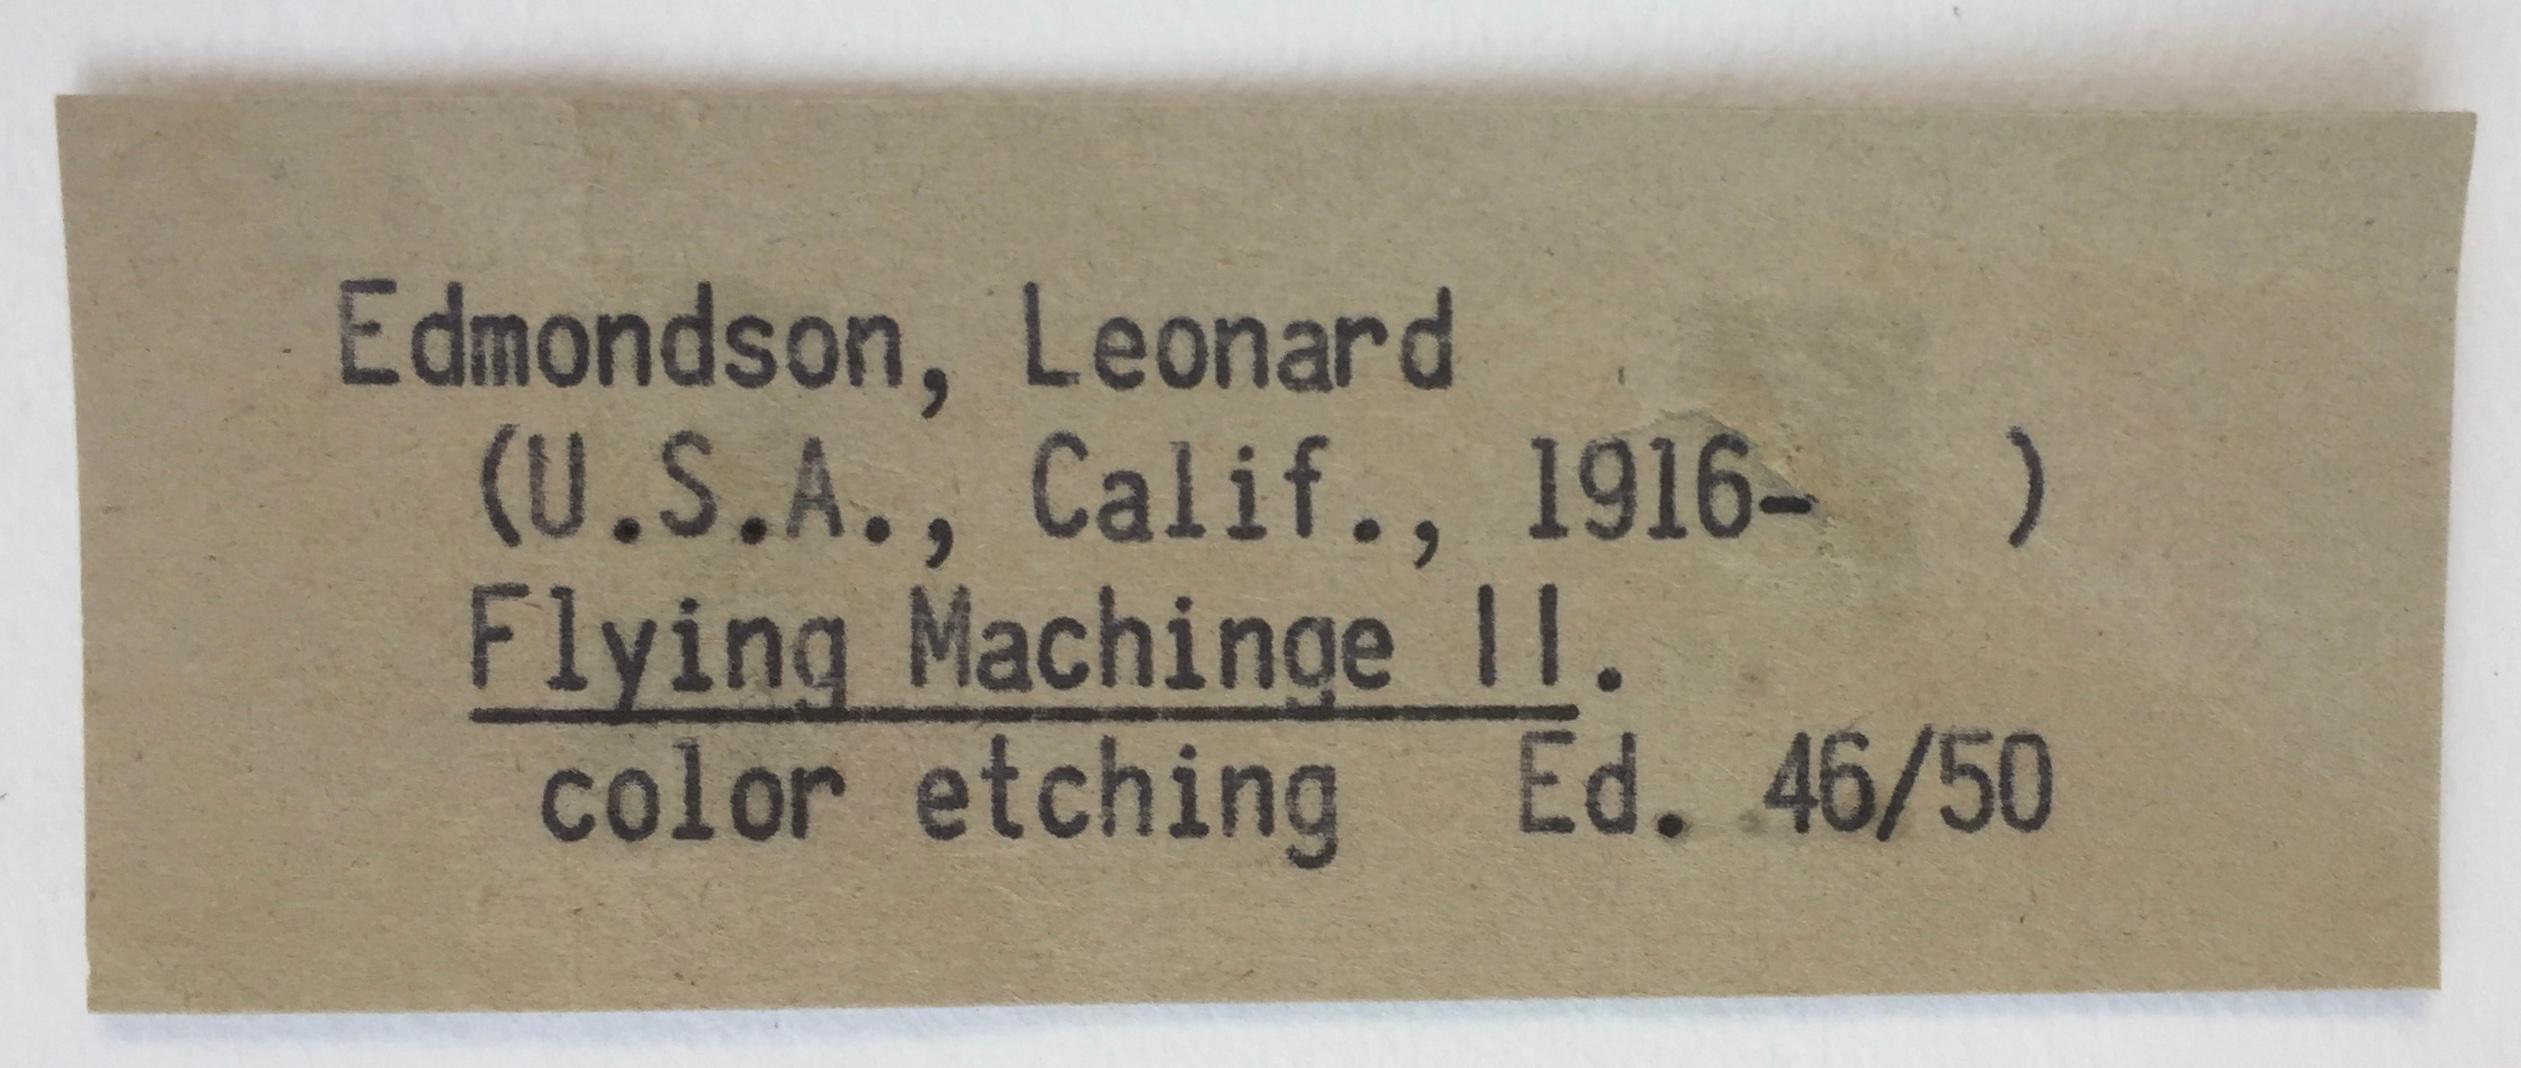 Flying Machine II - Abstract Expressionist Print by Leonard Edmondson